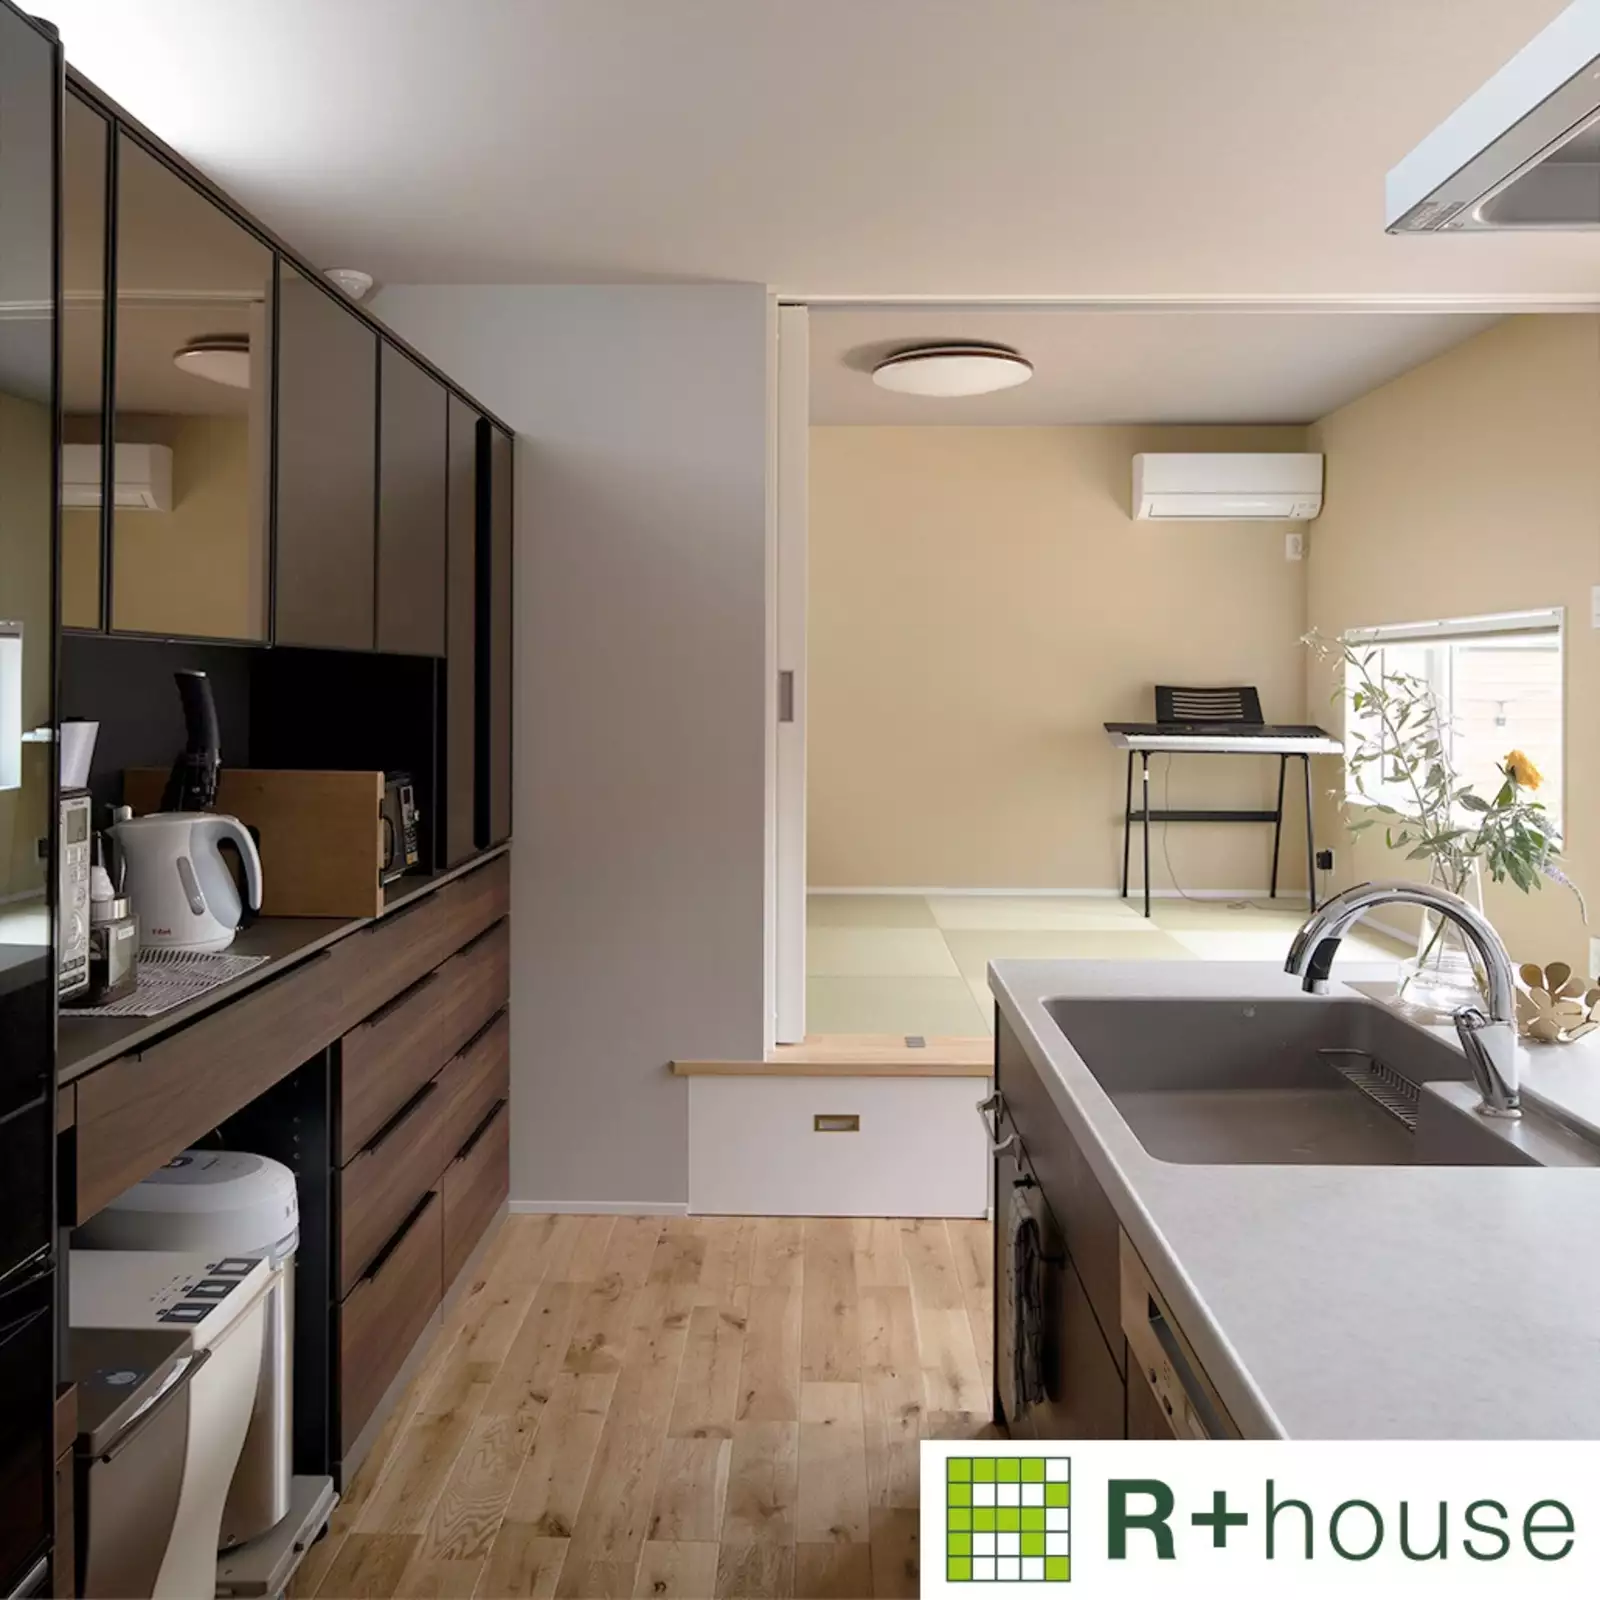 R+houseの物件のキッチンの写真です。右手にアイランド型のキッチンがあり、左手には落ち着いたダークブラウンの棚に家電が並ぶ